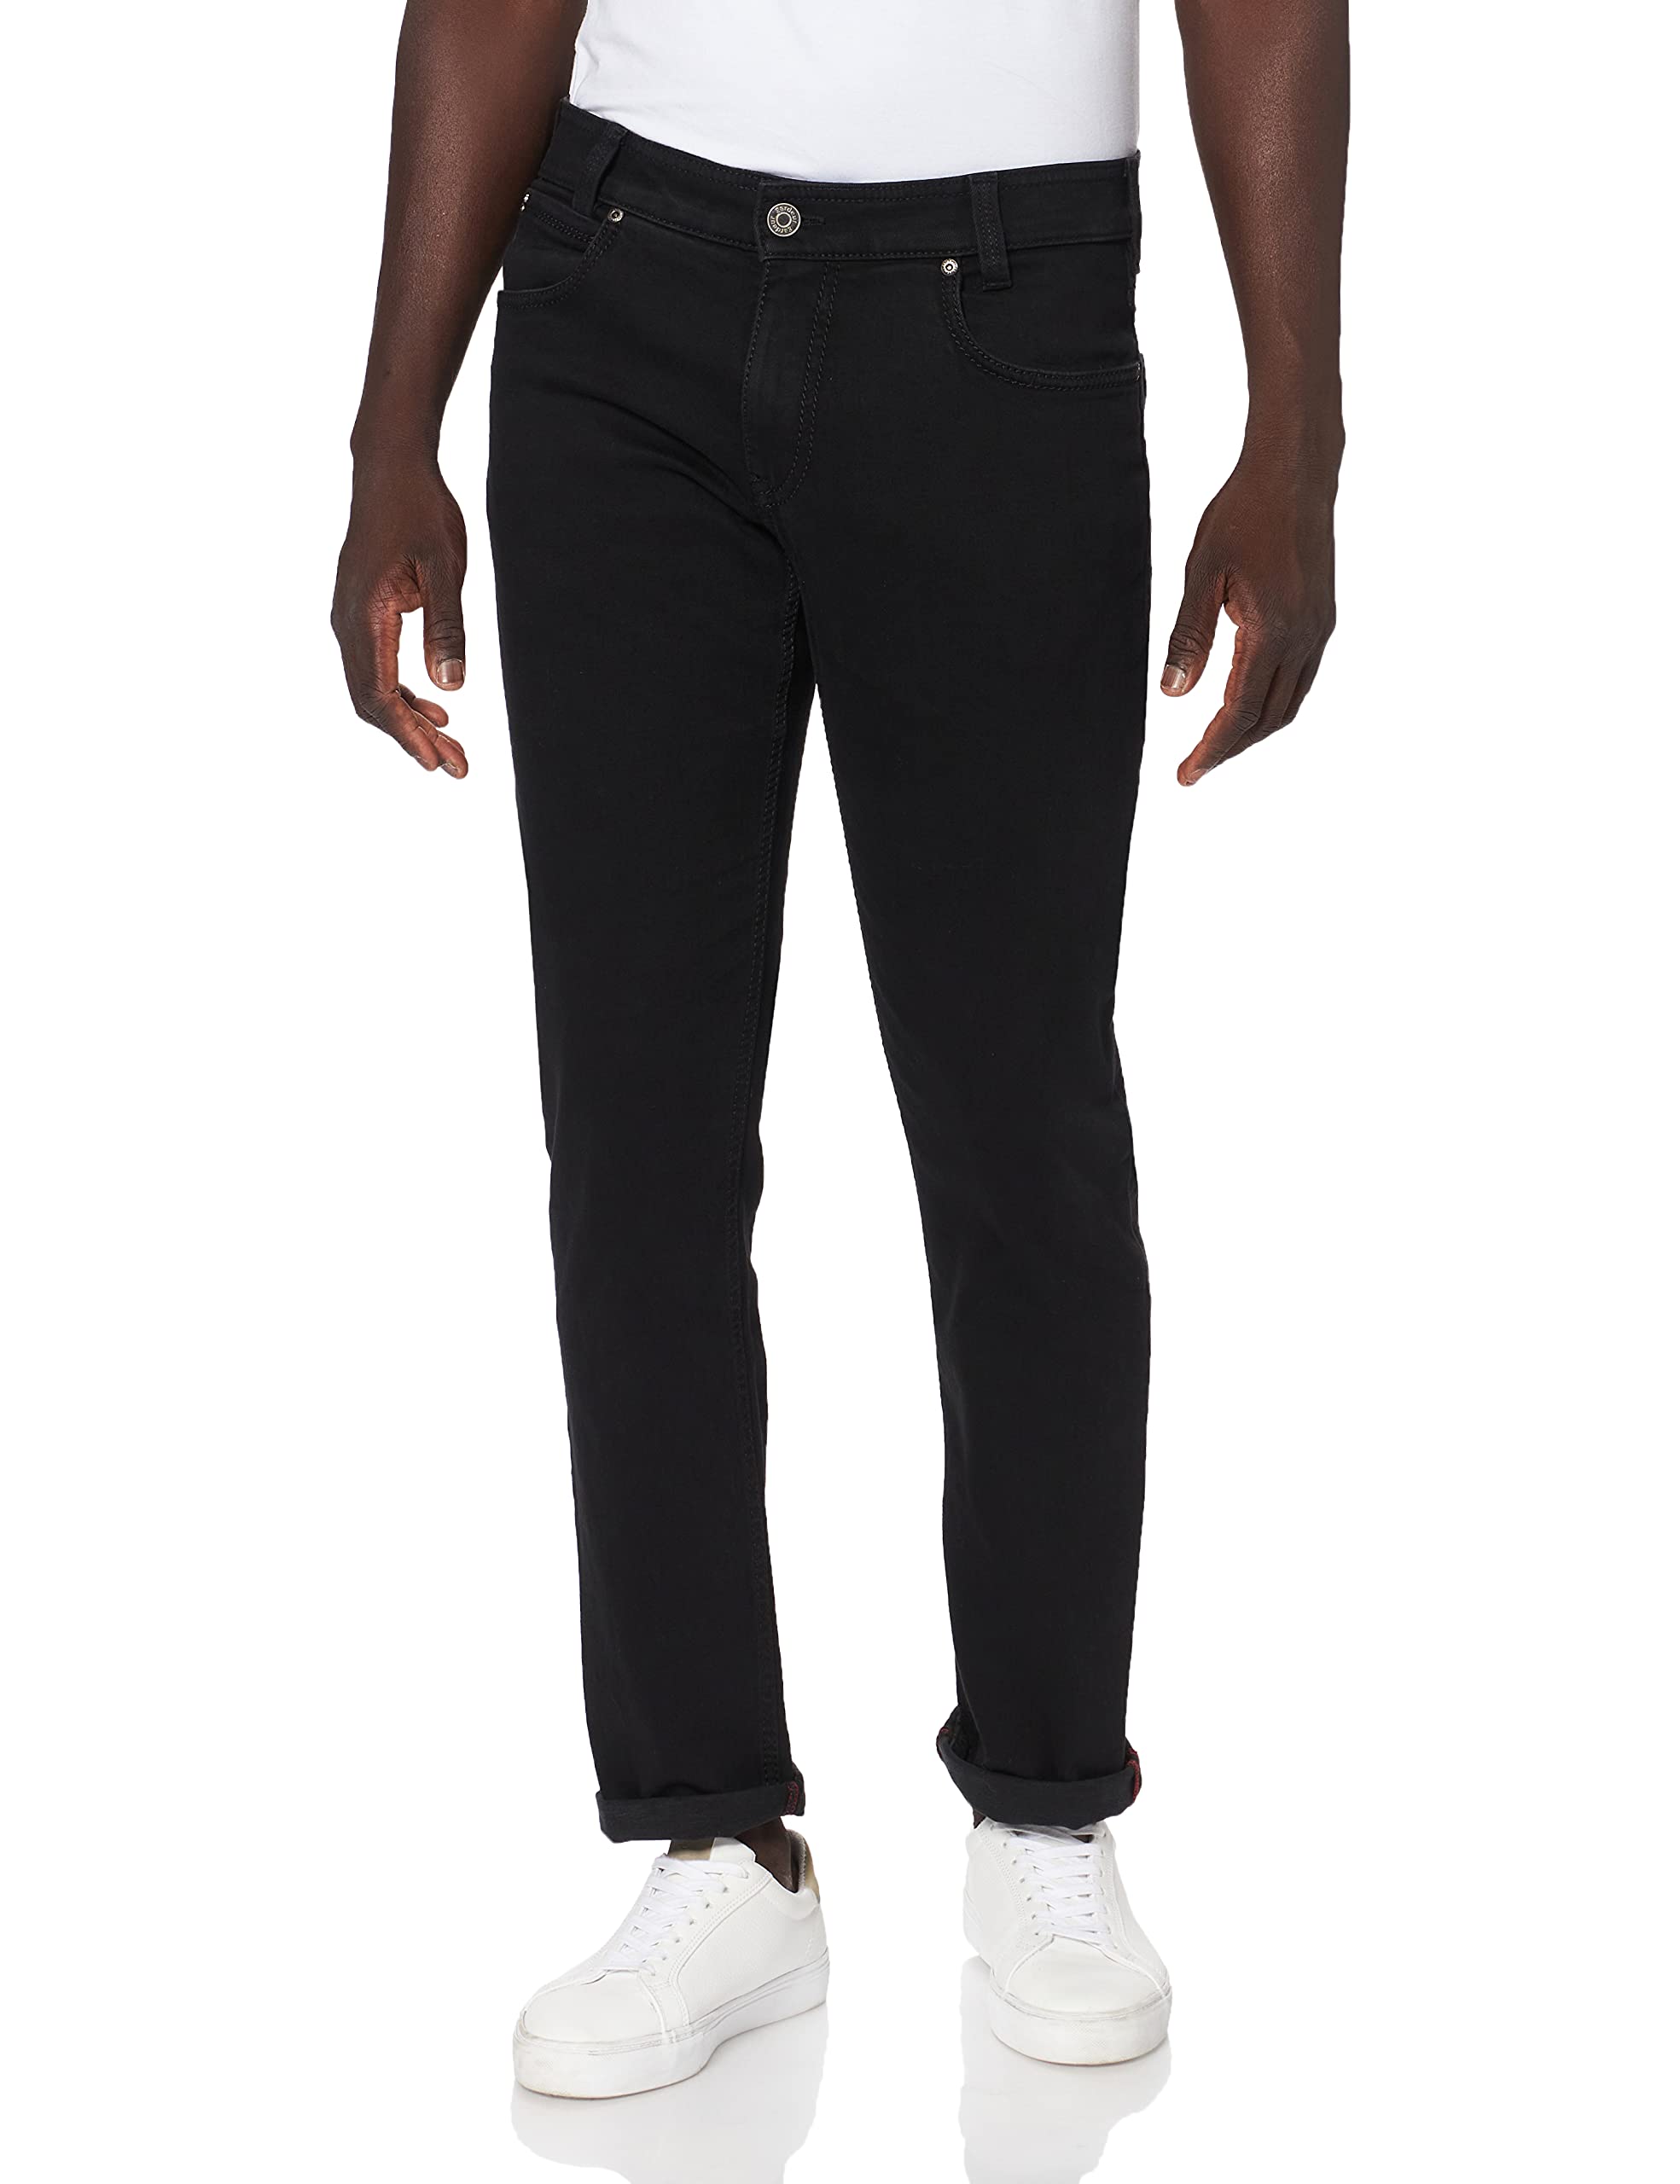 Atelier GARDEUR Herren Batu Comfort Stretch Jeans, Black/Black 799, 34W / 32L